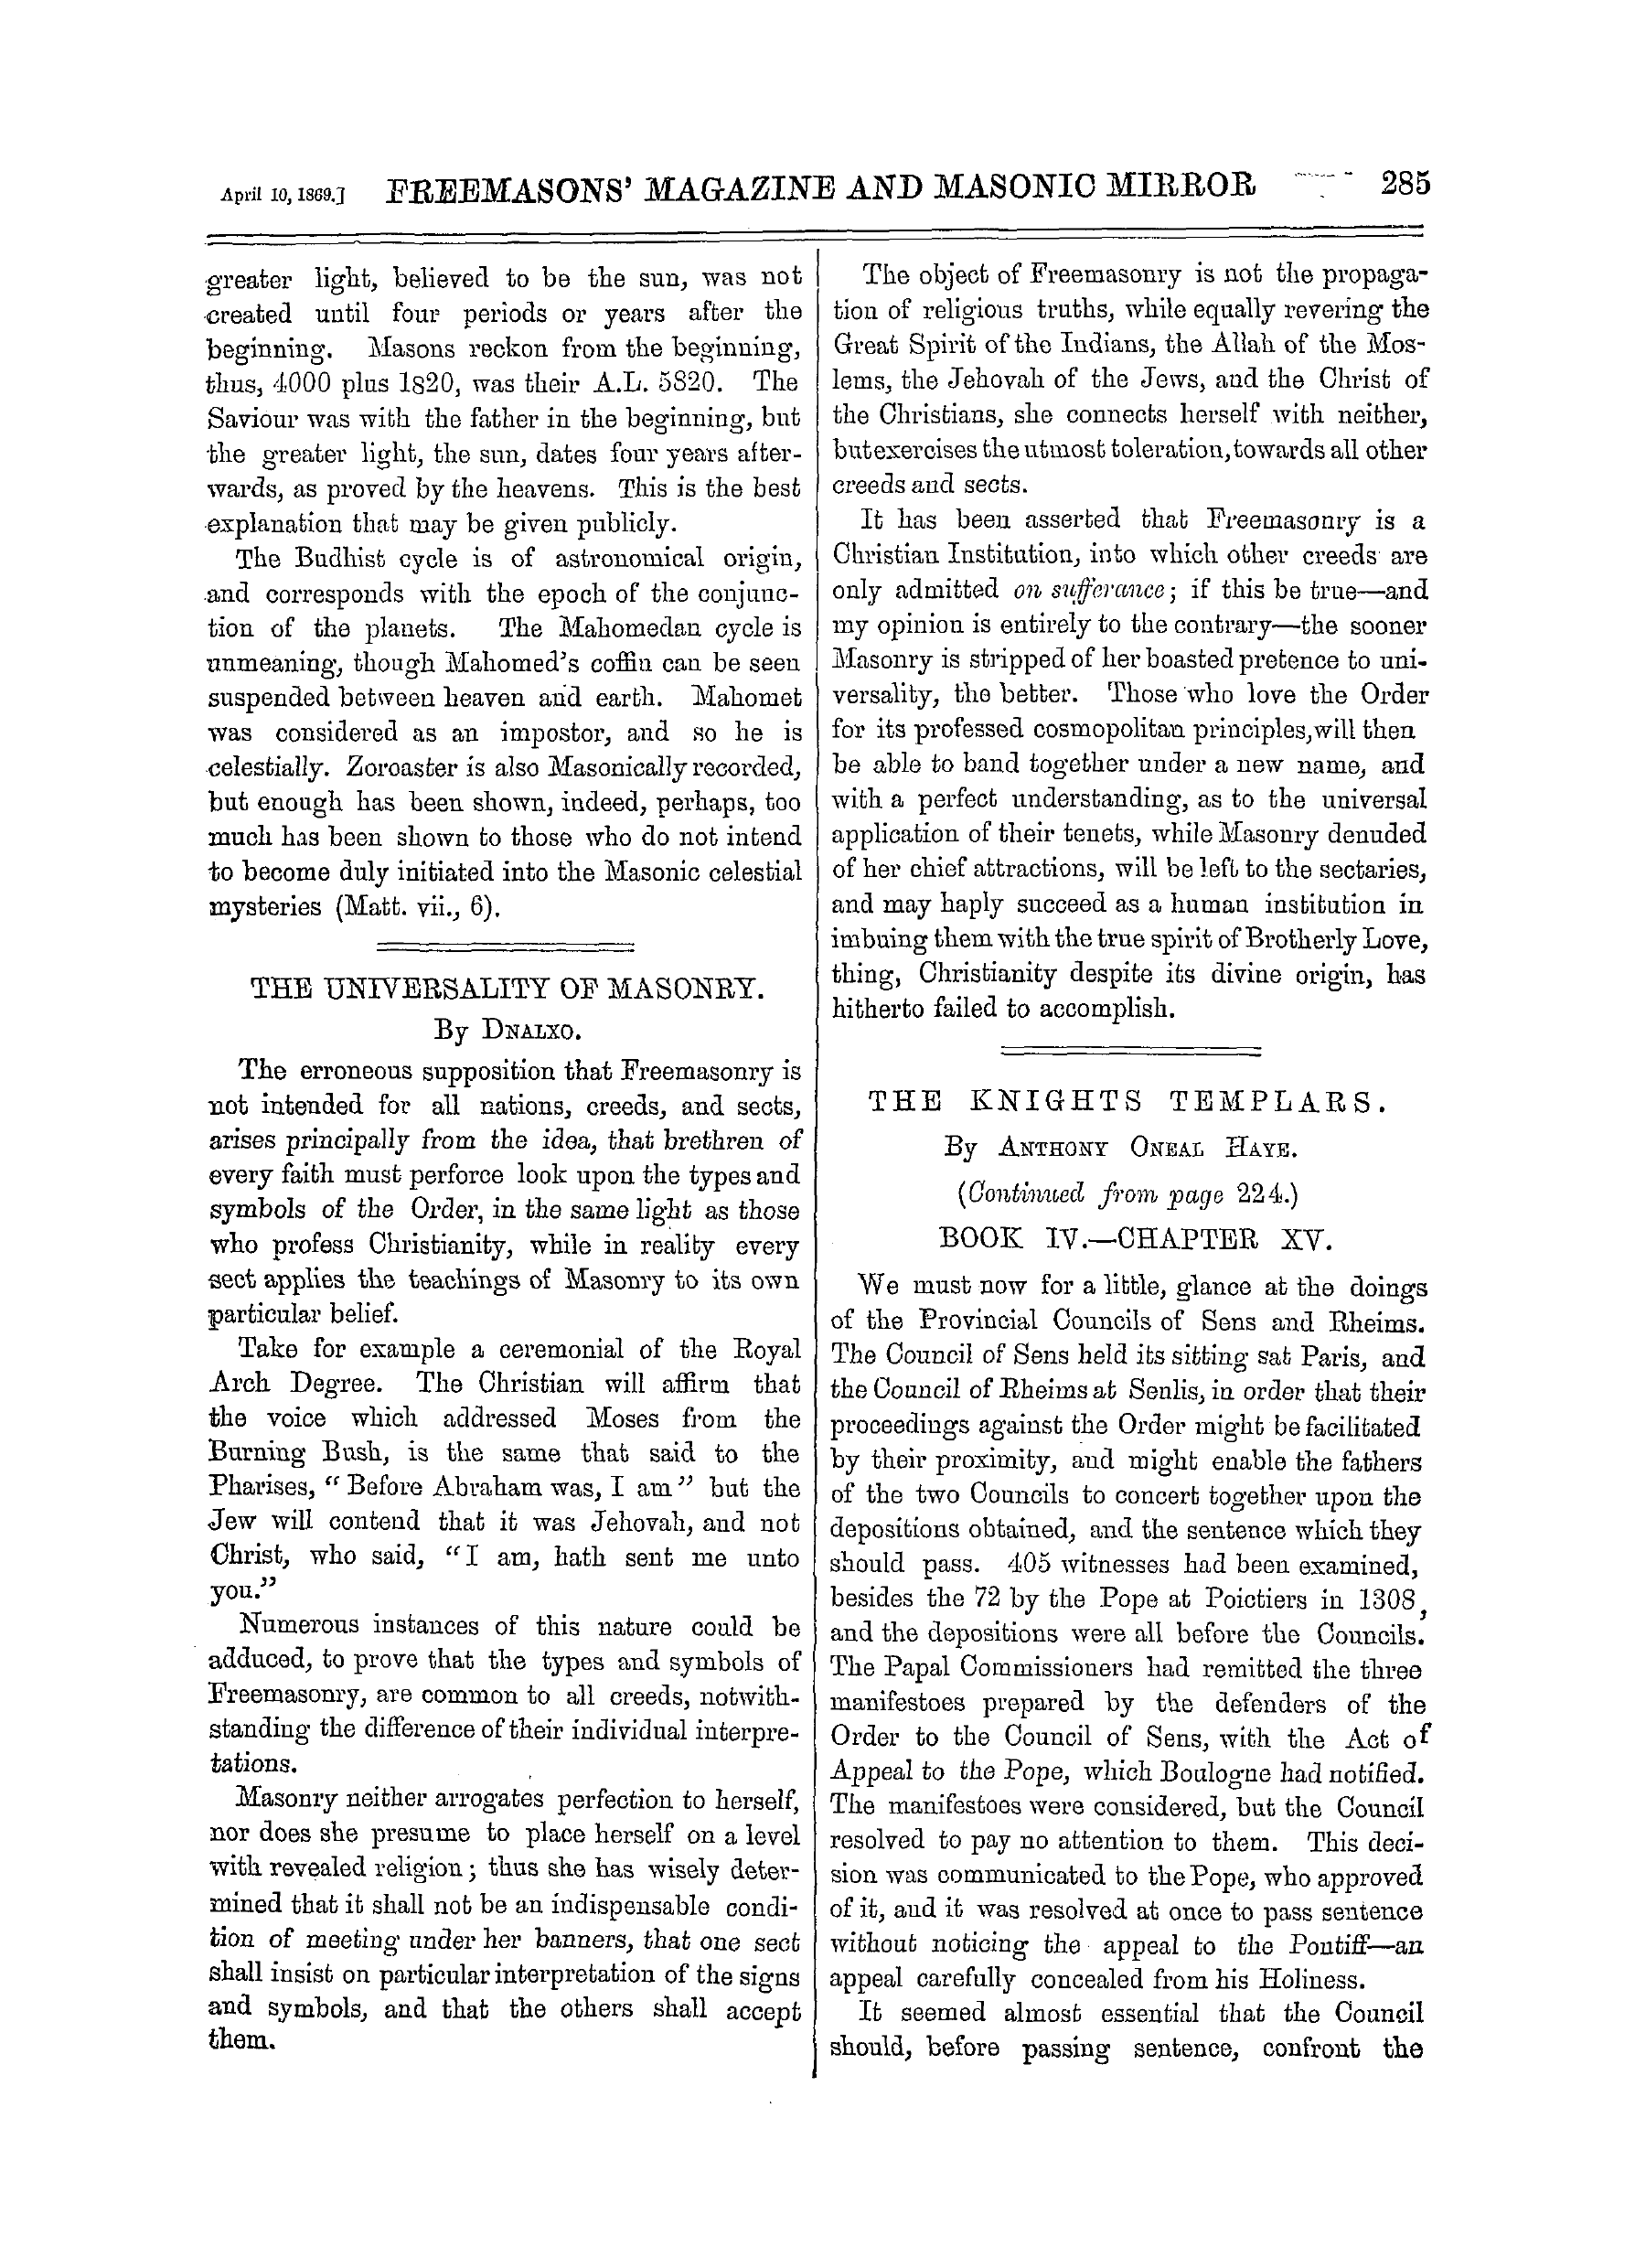 The Freemasons' Monthly Magazine: 1869-04-10 - The Knights Templars.